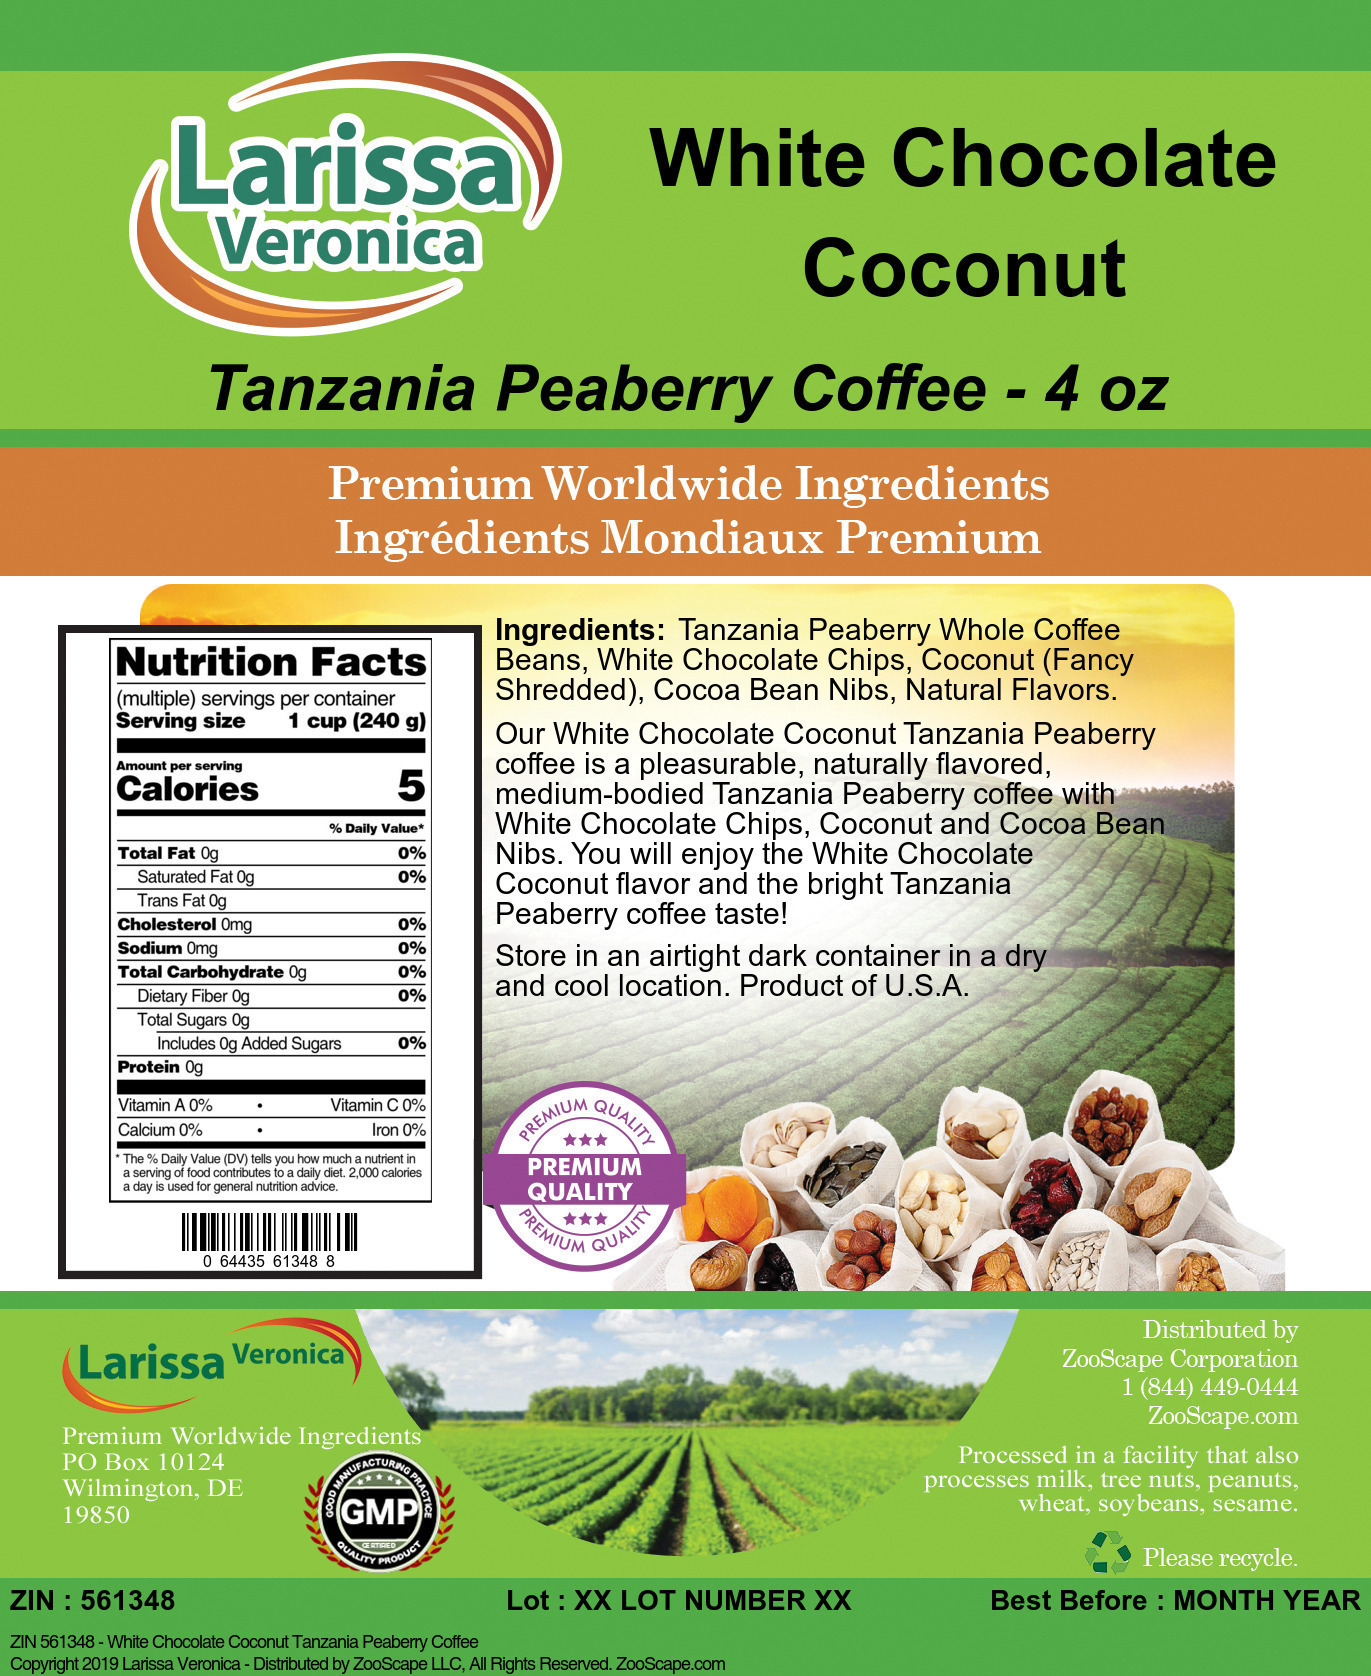 White Chocolate Coconut Tanzania Peaberry Coffee - Label